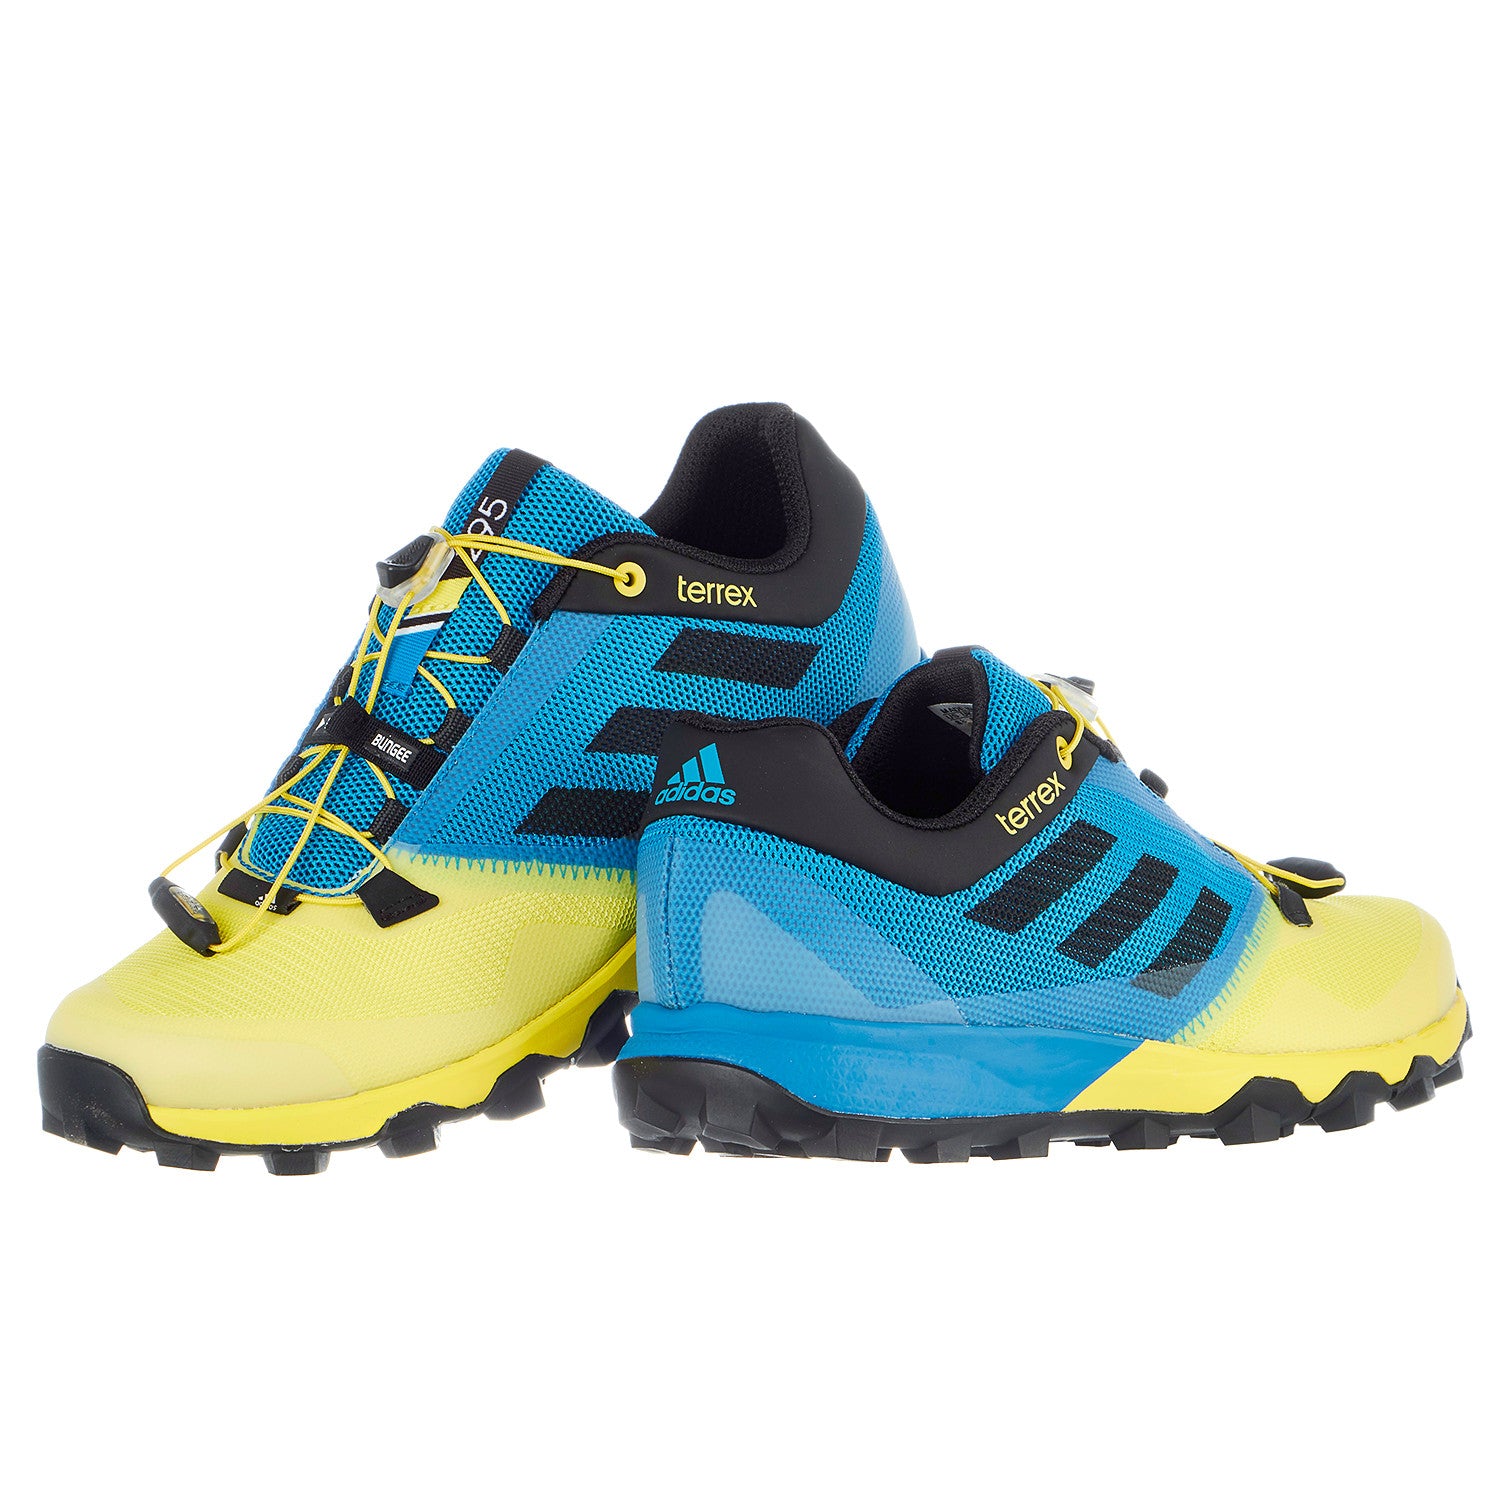 Adidas Outdoor Terrex Trailmaker Trail Running Shoes - Men's -